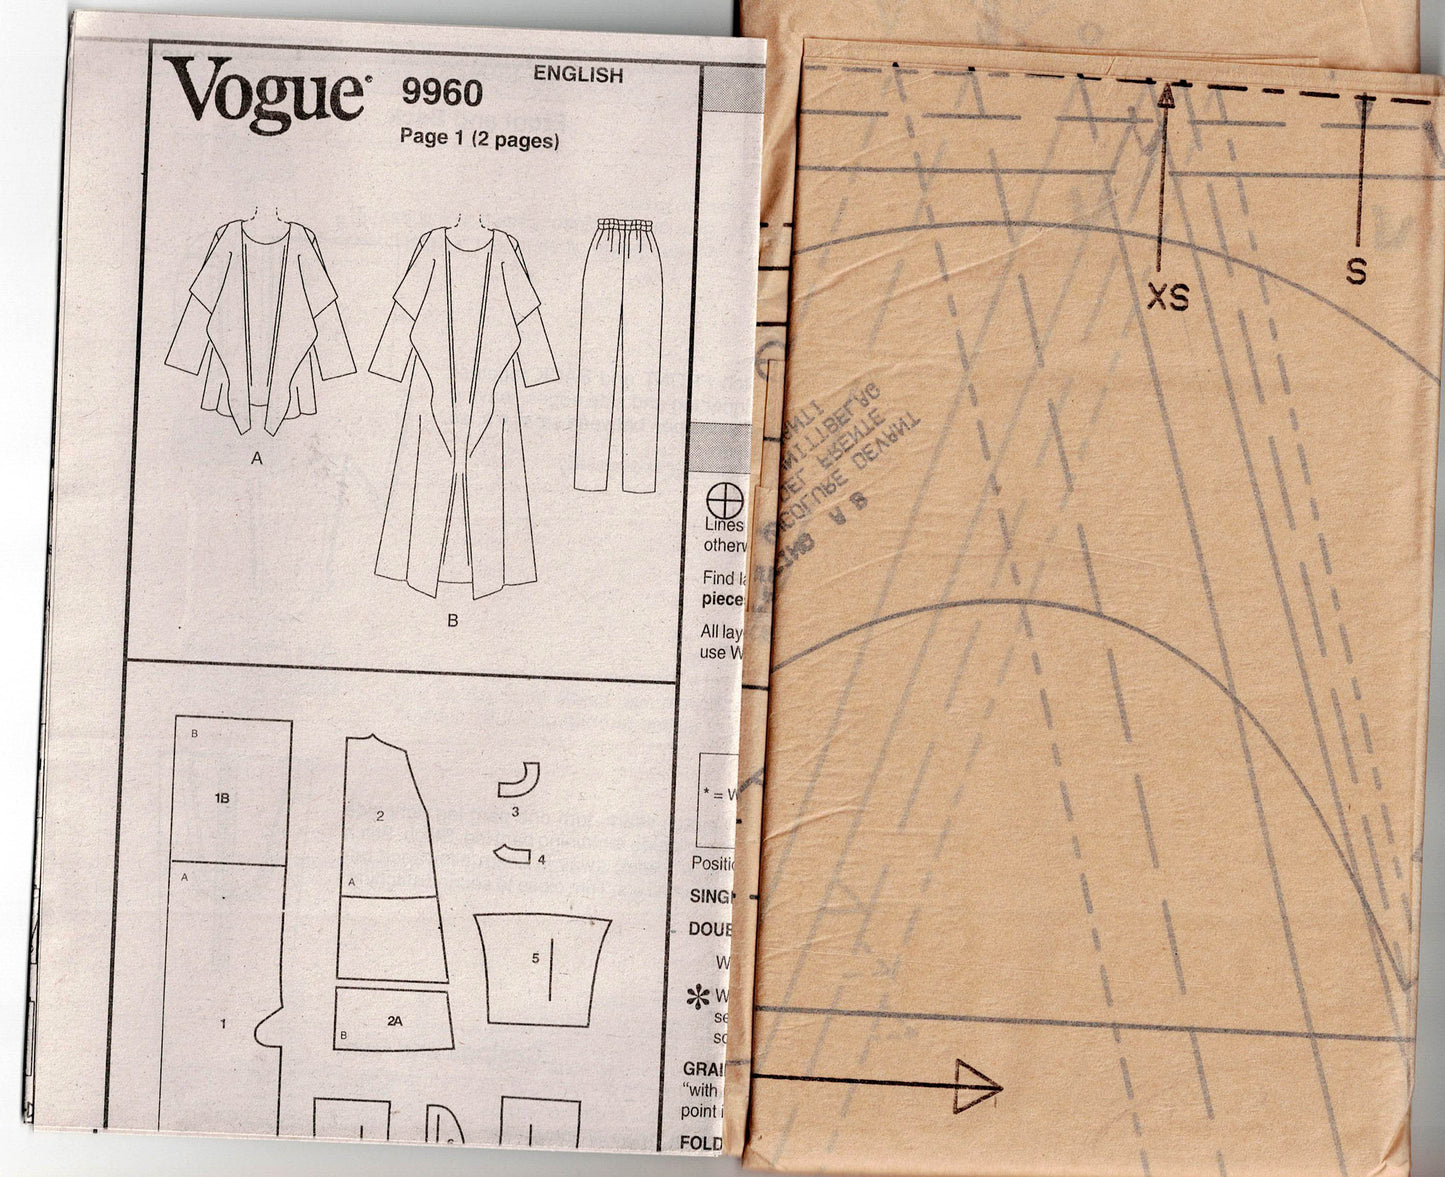 Vogue American Designer 9960 KAREN NYE Womens Draped Caftan & Pants 1990s Vintage Sewing Pattern Sizes XS - M UNCUT Factory Folded